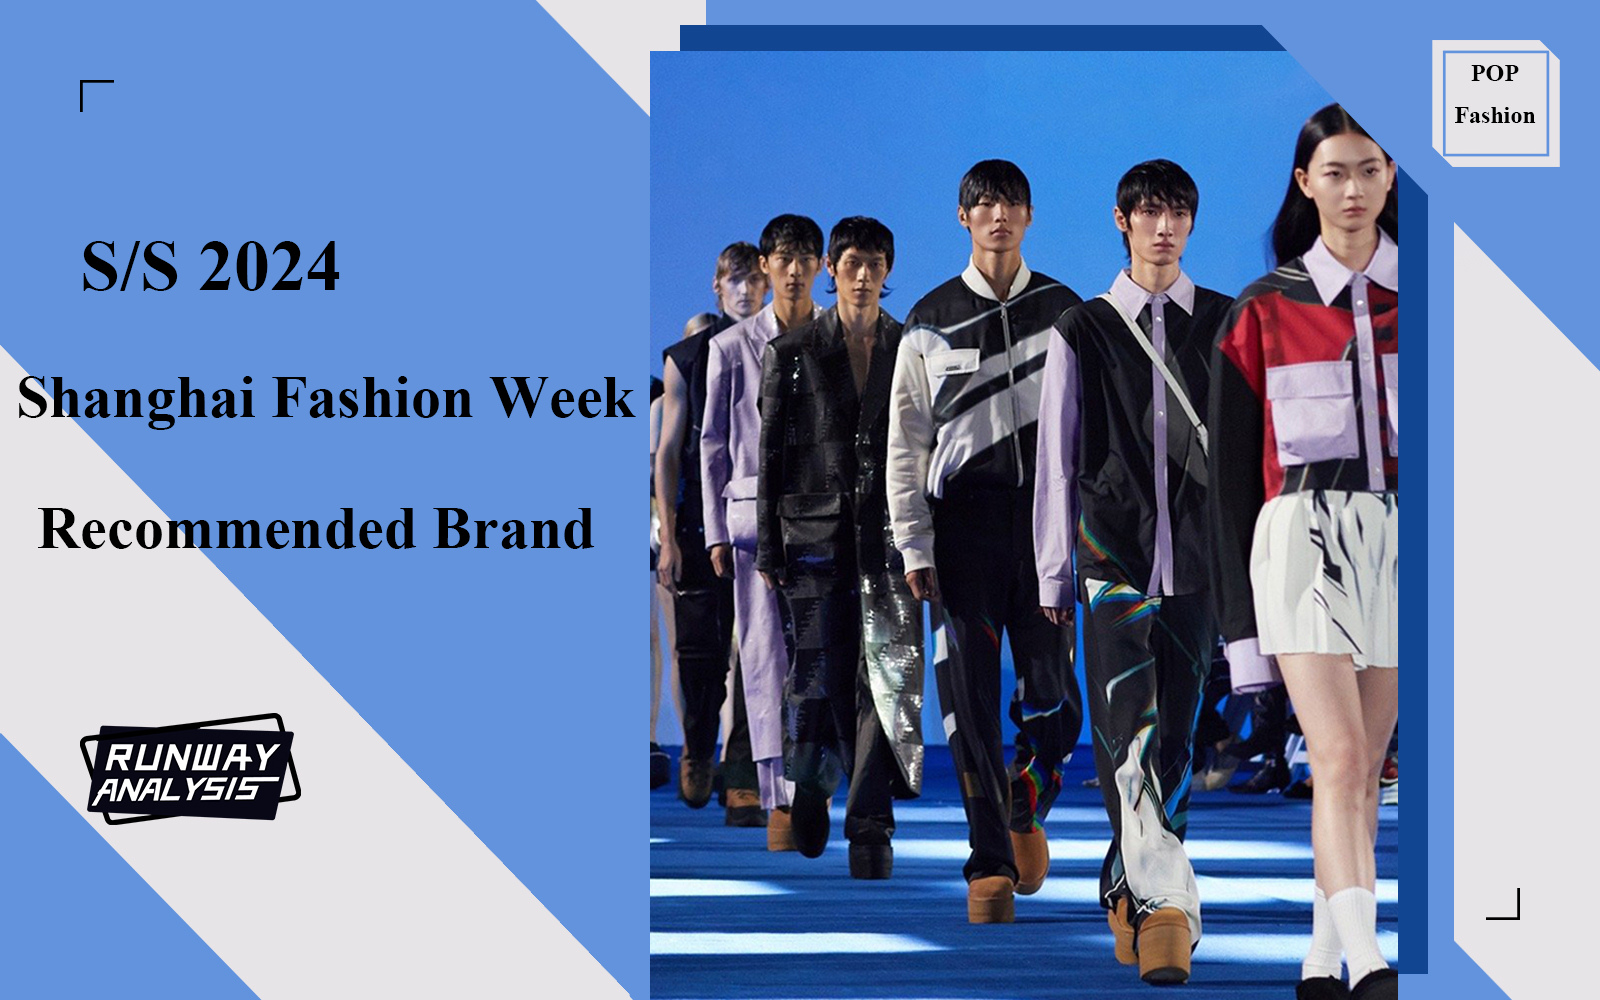 Shanghai Fashion Week: Key Brand Recommendations